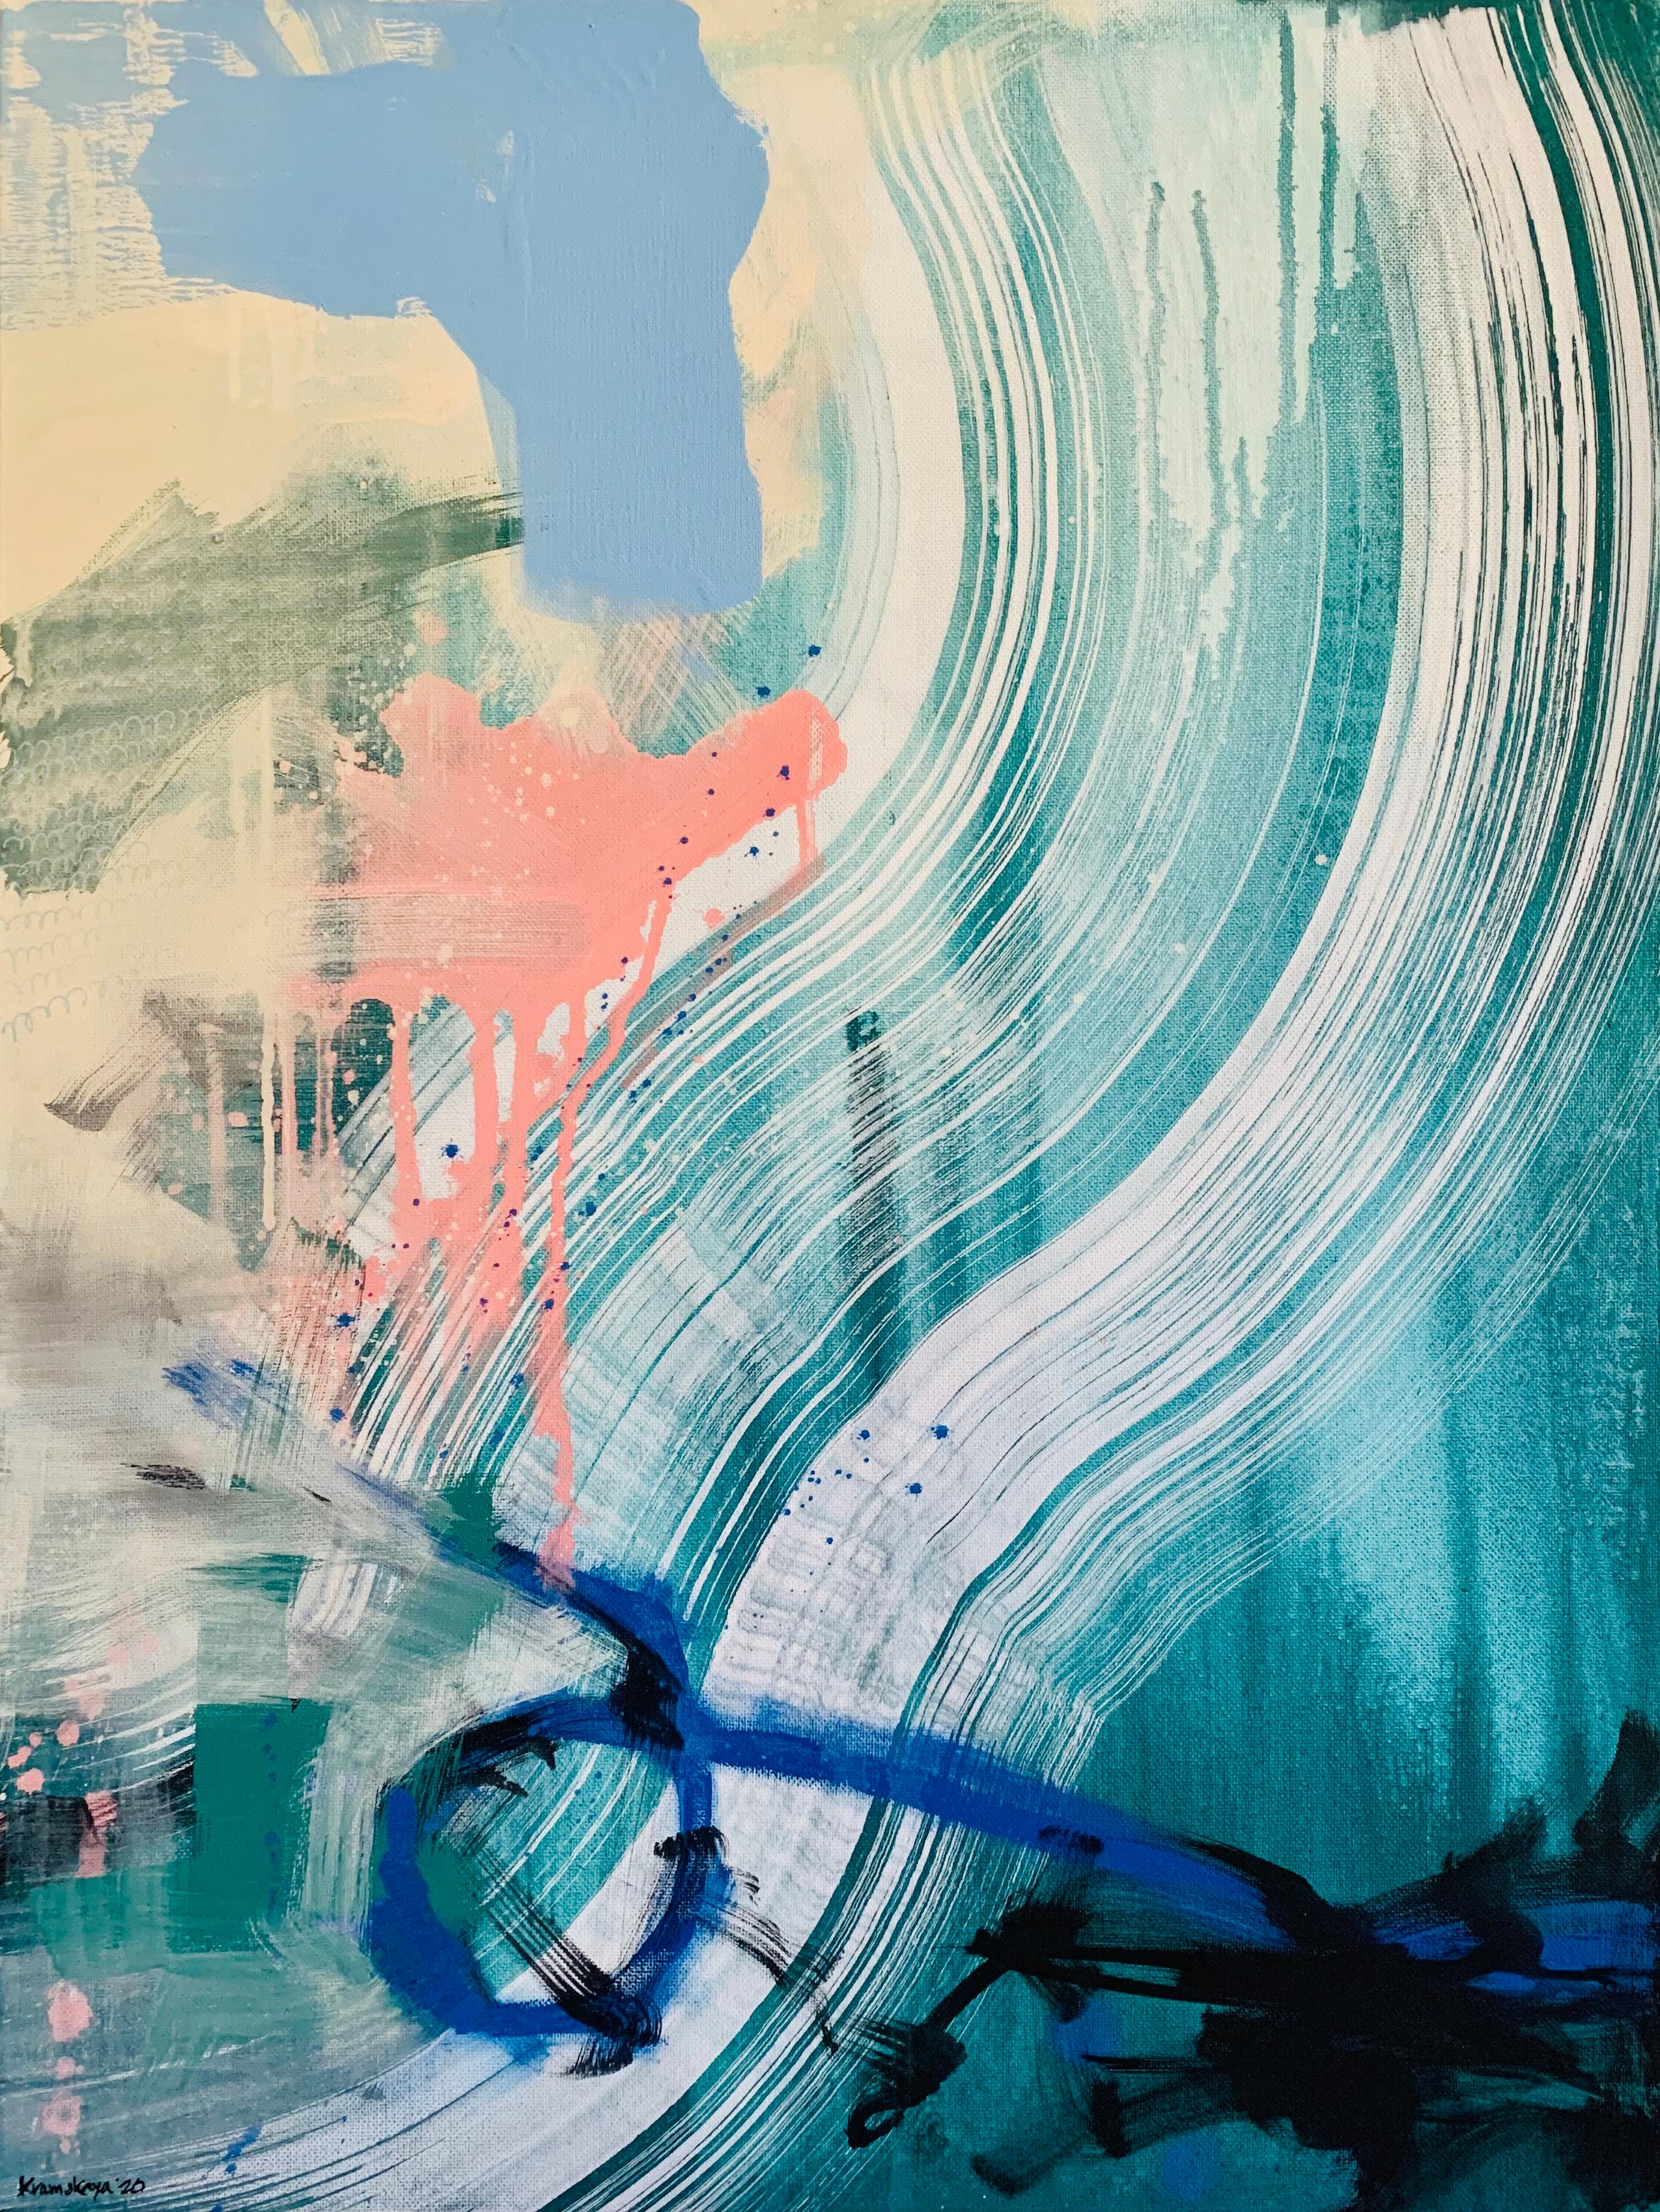 Just Breathe- Abstract Acrylic on Canvas - Grey, Pink, Teal, Blue - Mixed Media Art by Natasha Kramskaya